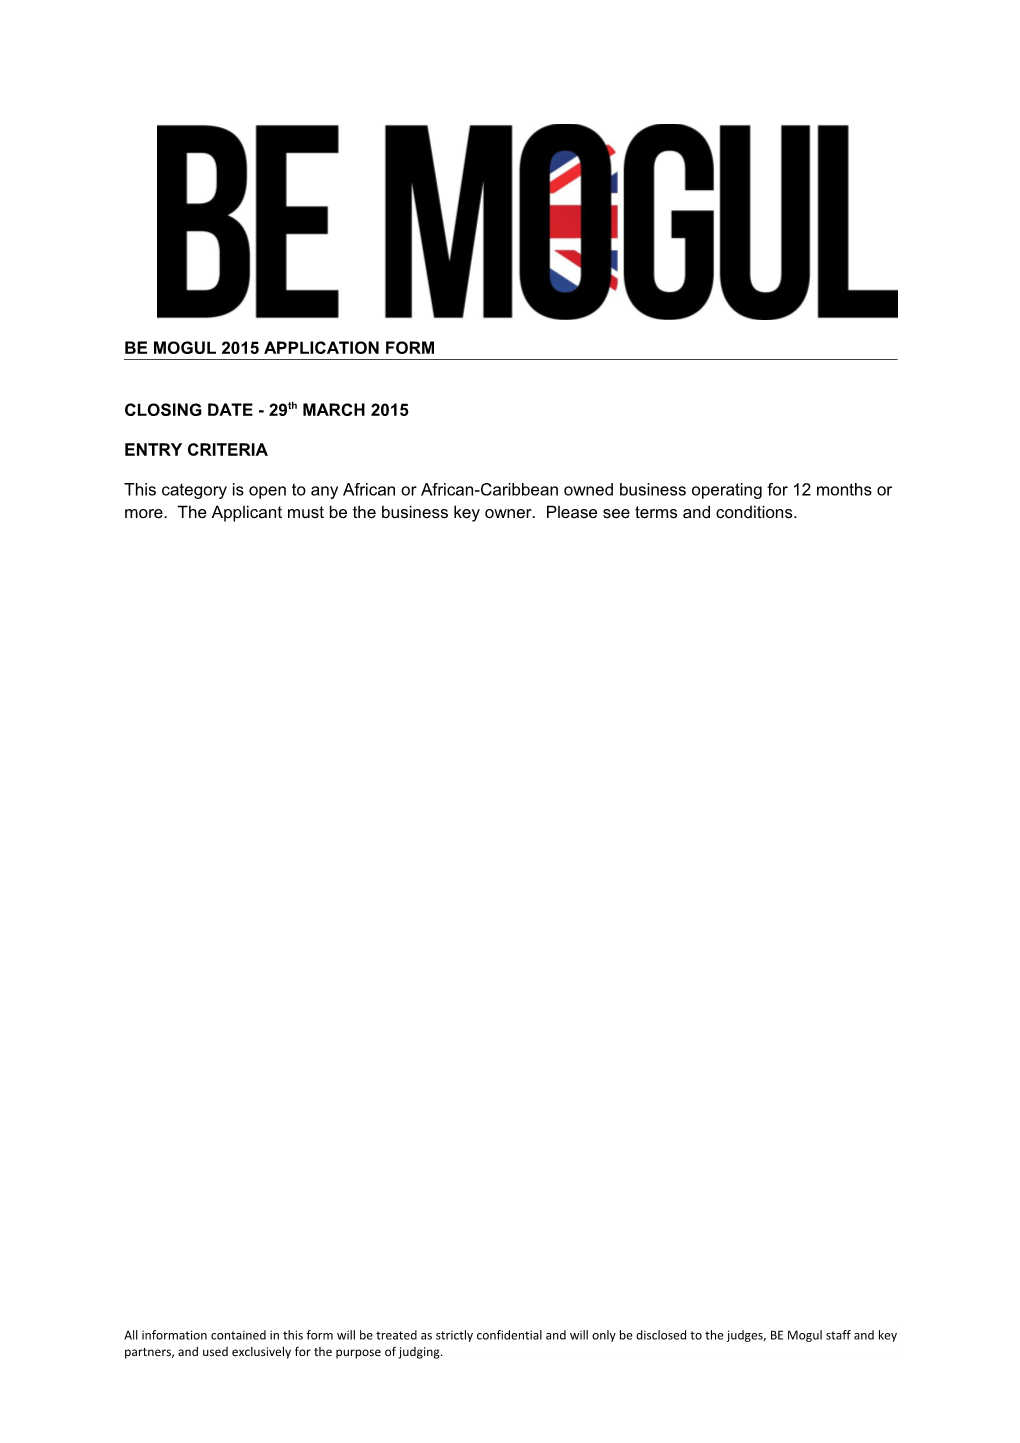 Be Mogul 2015 Application Form